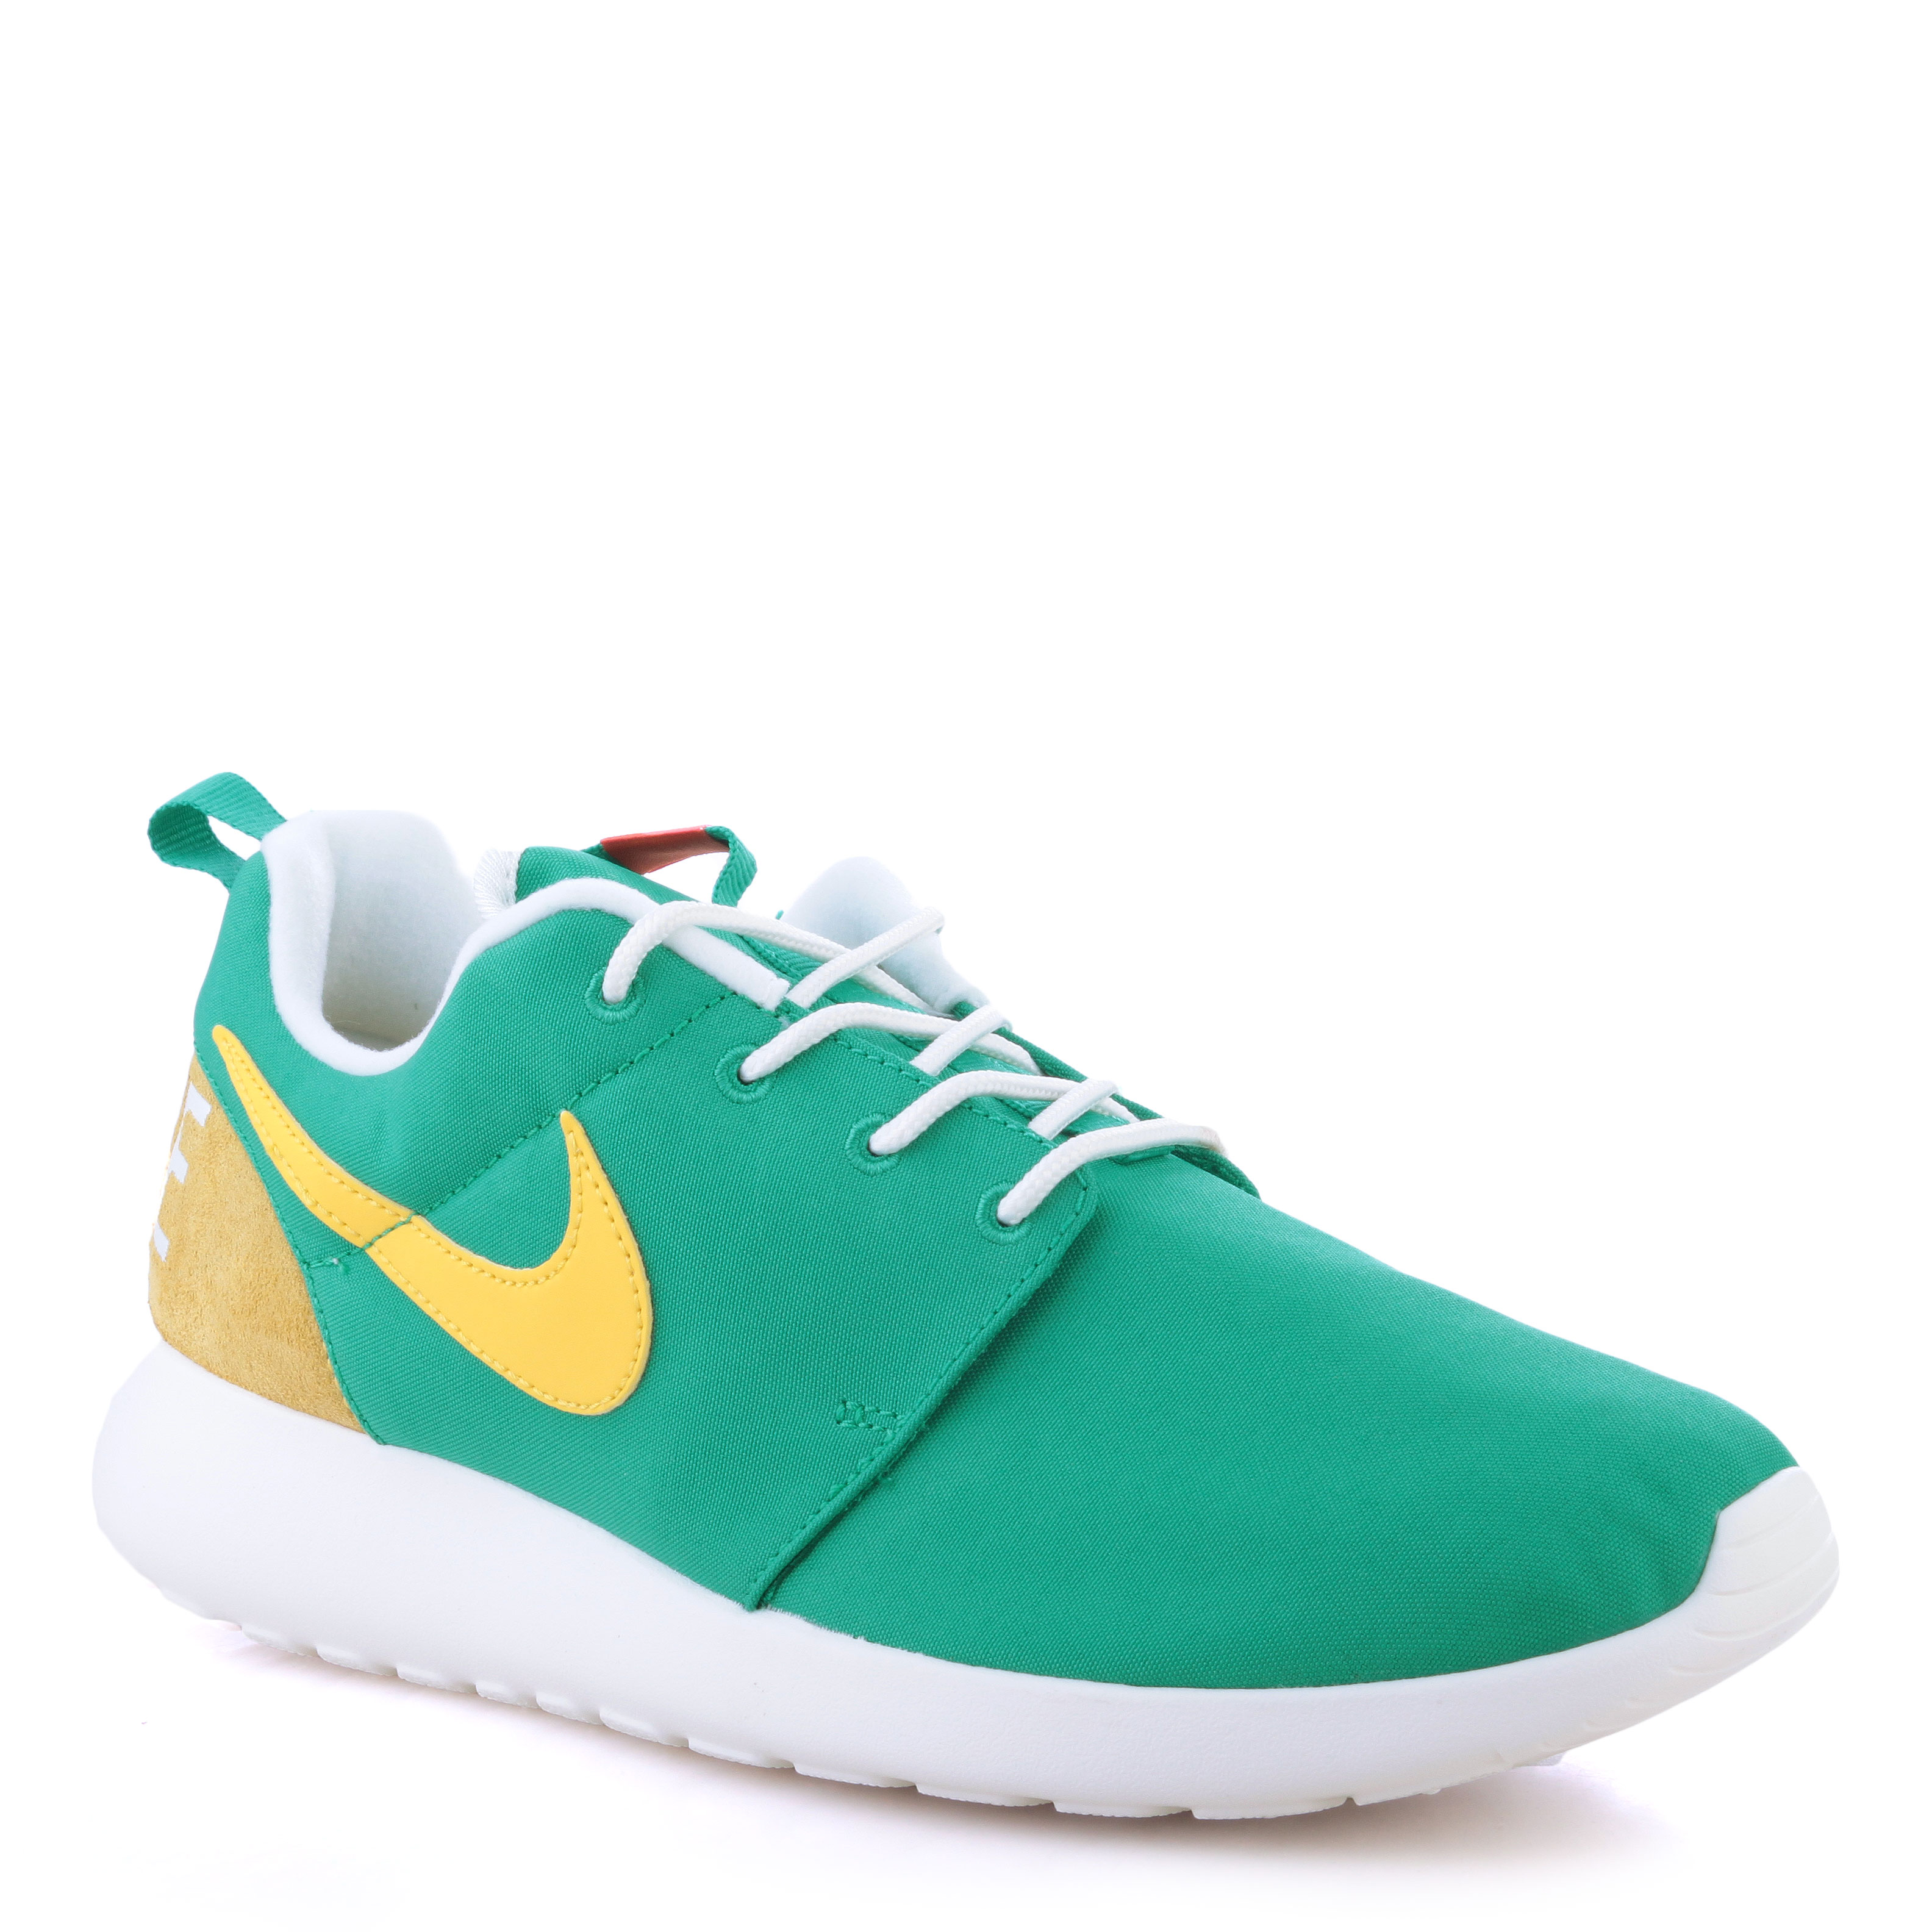 мужские зеленые кроссовки Nike Roshe One Retro 819881-371 - цена, описание, фото 1